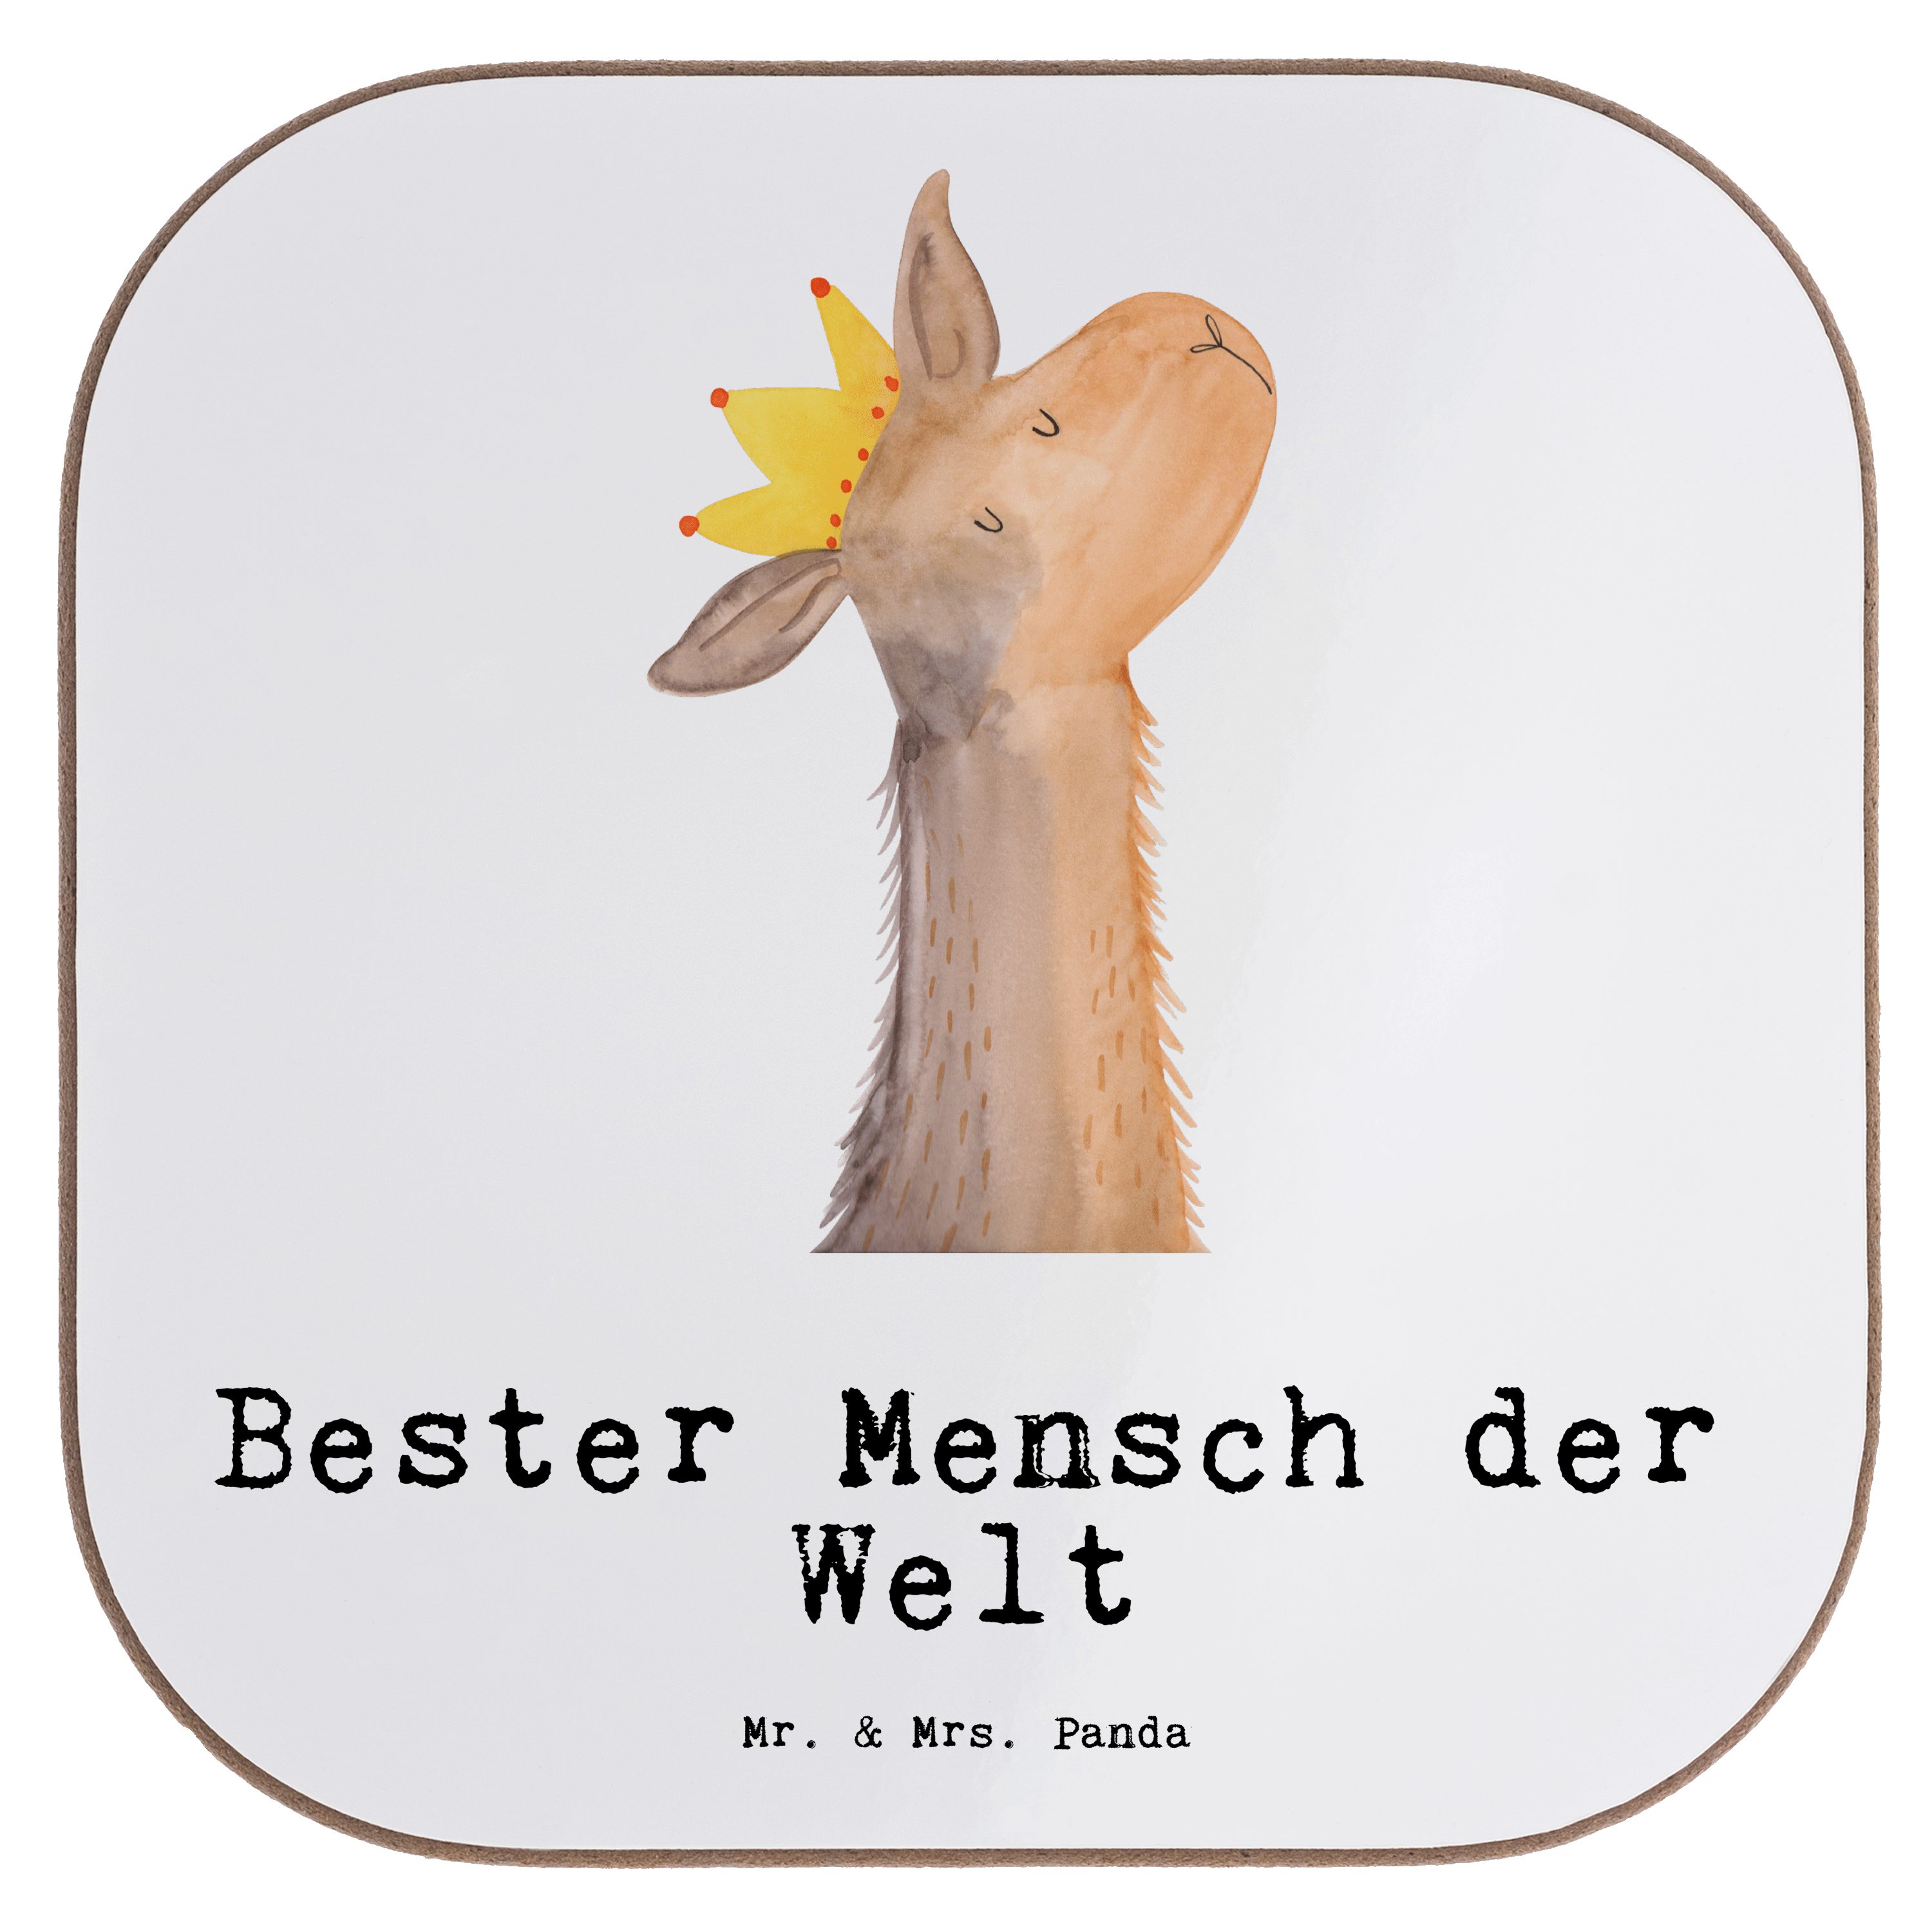 Mr. & Mrs. Panda Getränkeuntersetzer Lama Bester Mensch der Welt - Weiß - Geschenk, Glasuntersetzer, Bierd, 1-tlg.